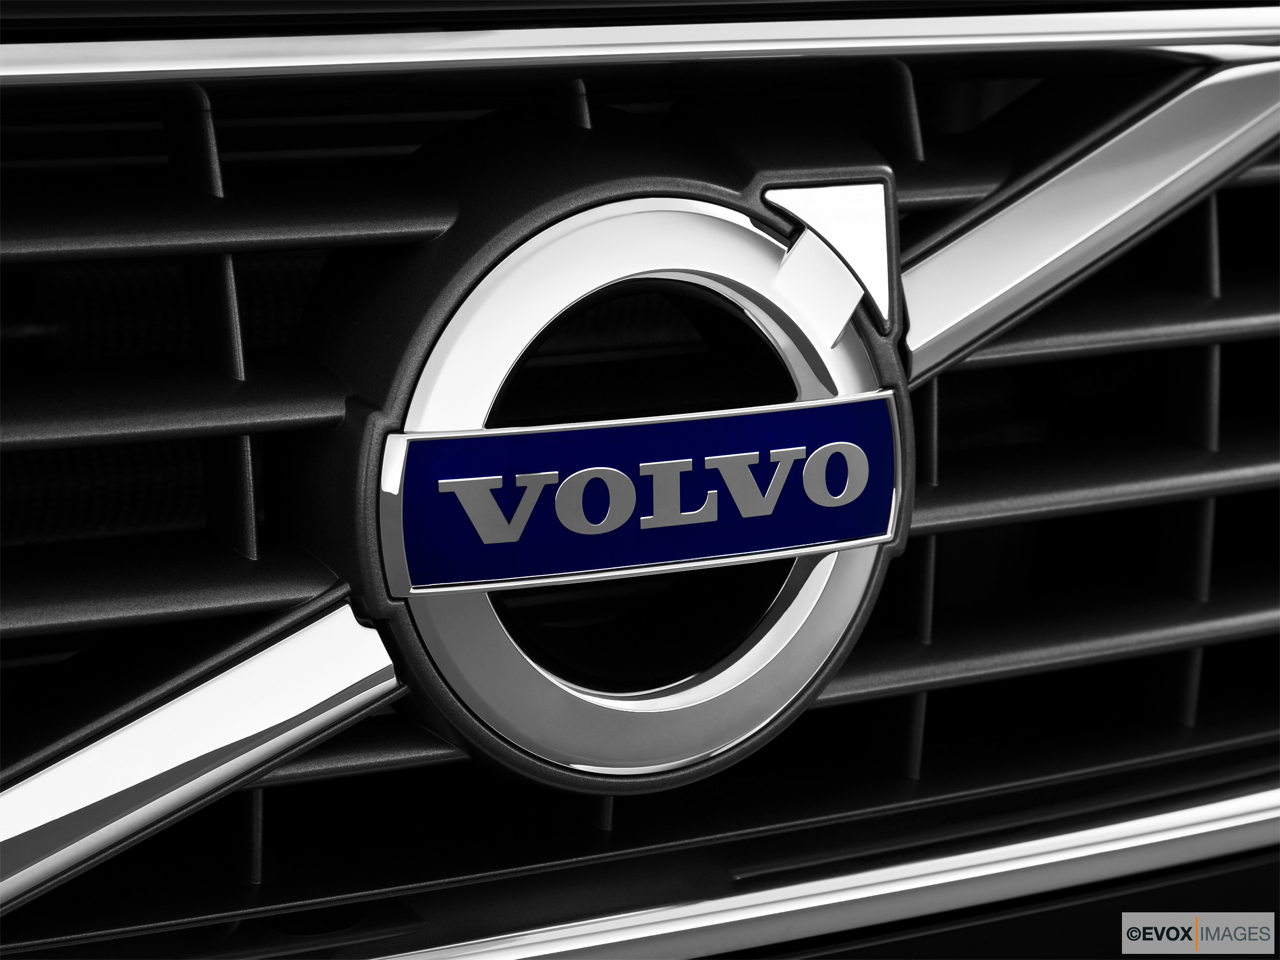 2010 Volvo S80 3.2 Exterior Bonus Shots (no set spec) 